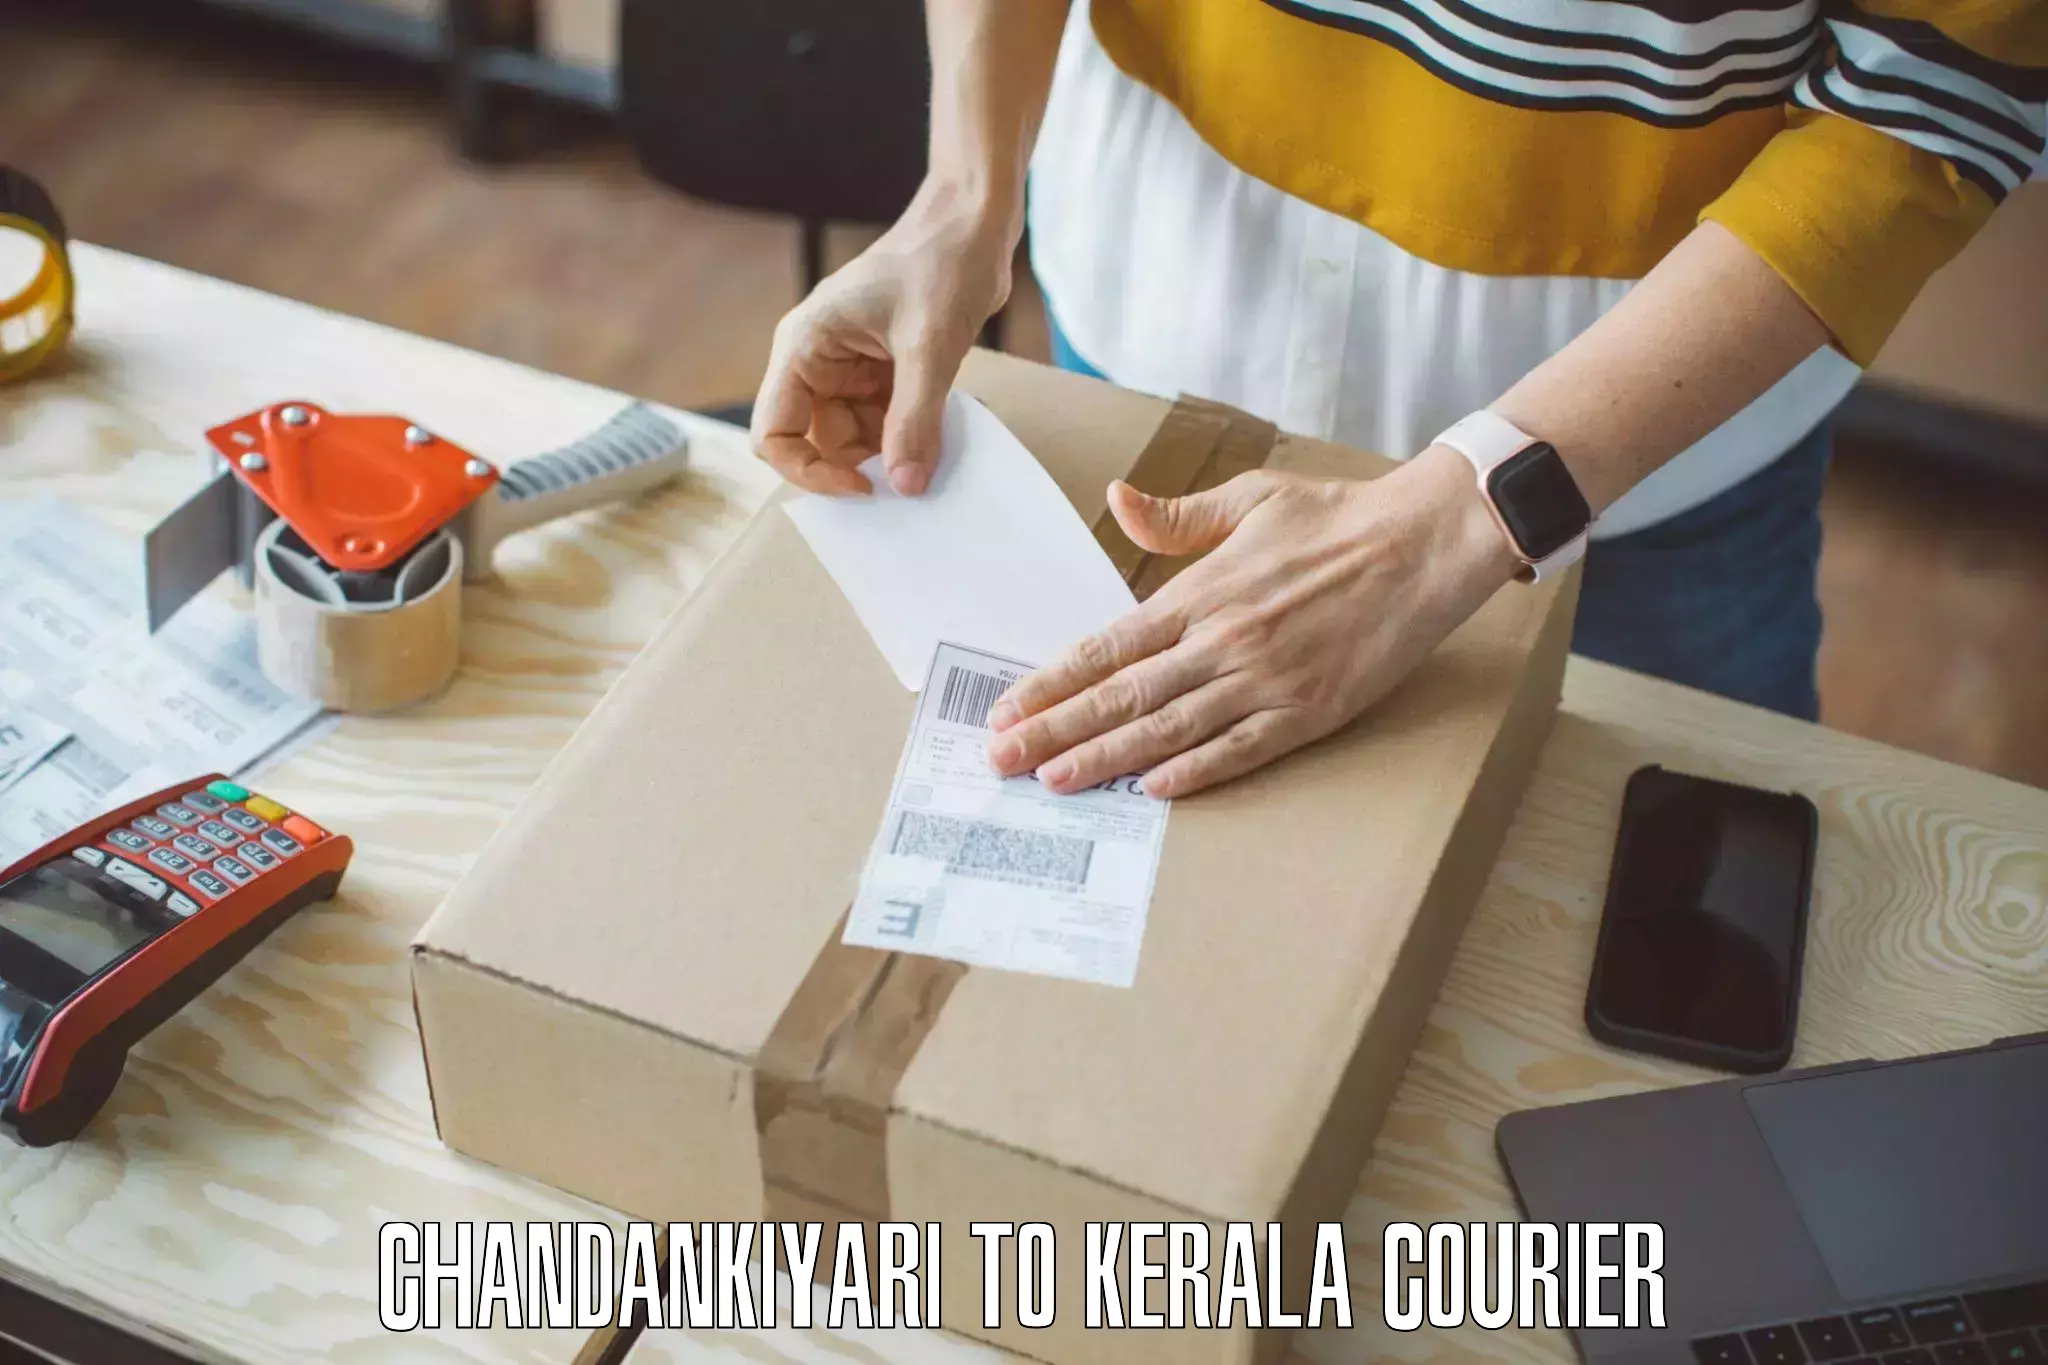 Trusted moving company Chandankiyari to Kerala